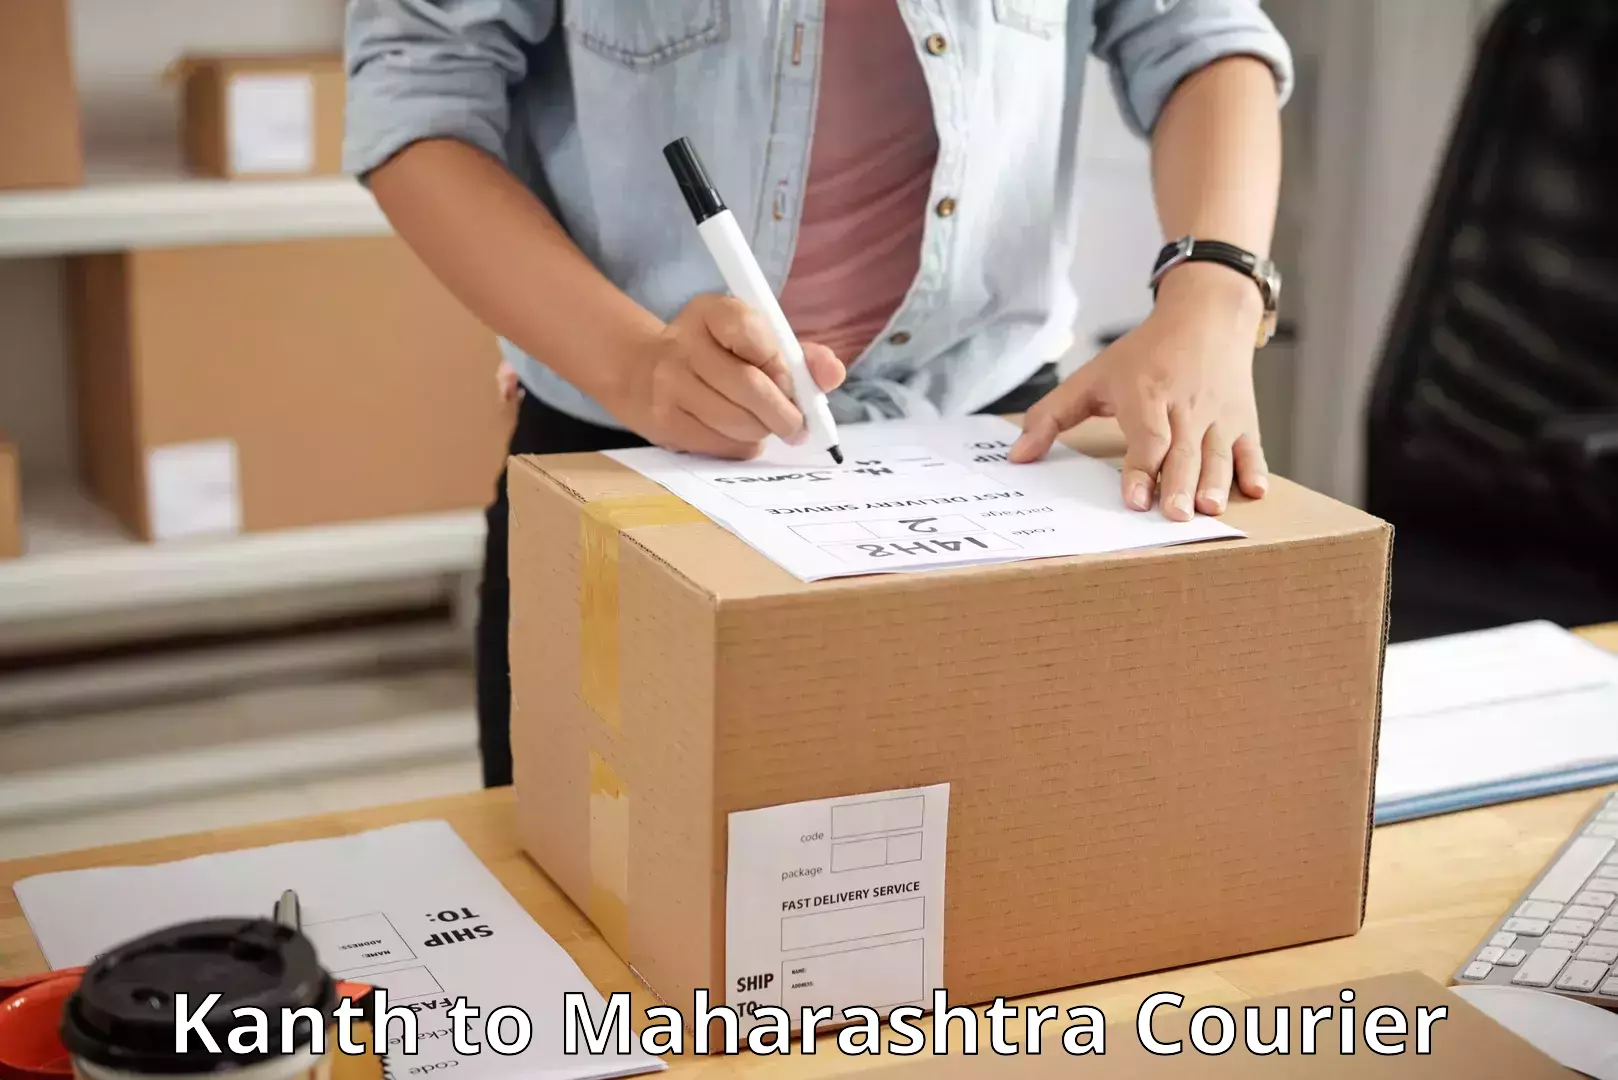 Courier service innovation Kanth to Maharashtra